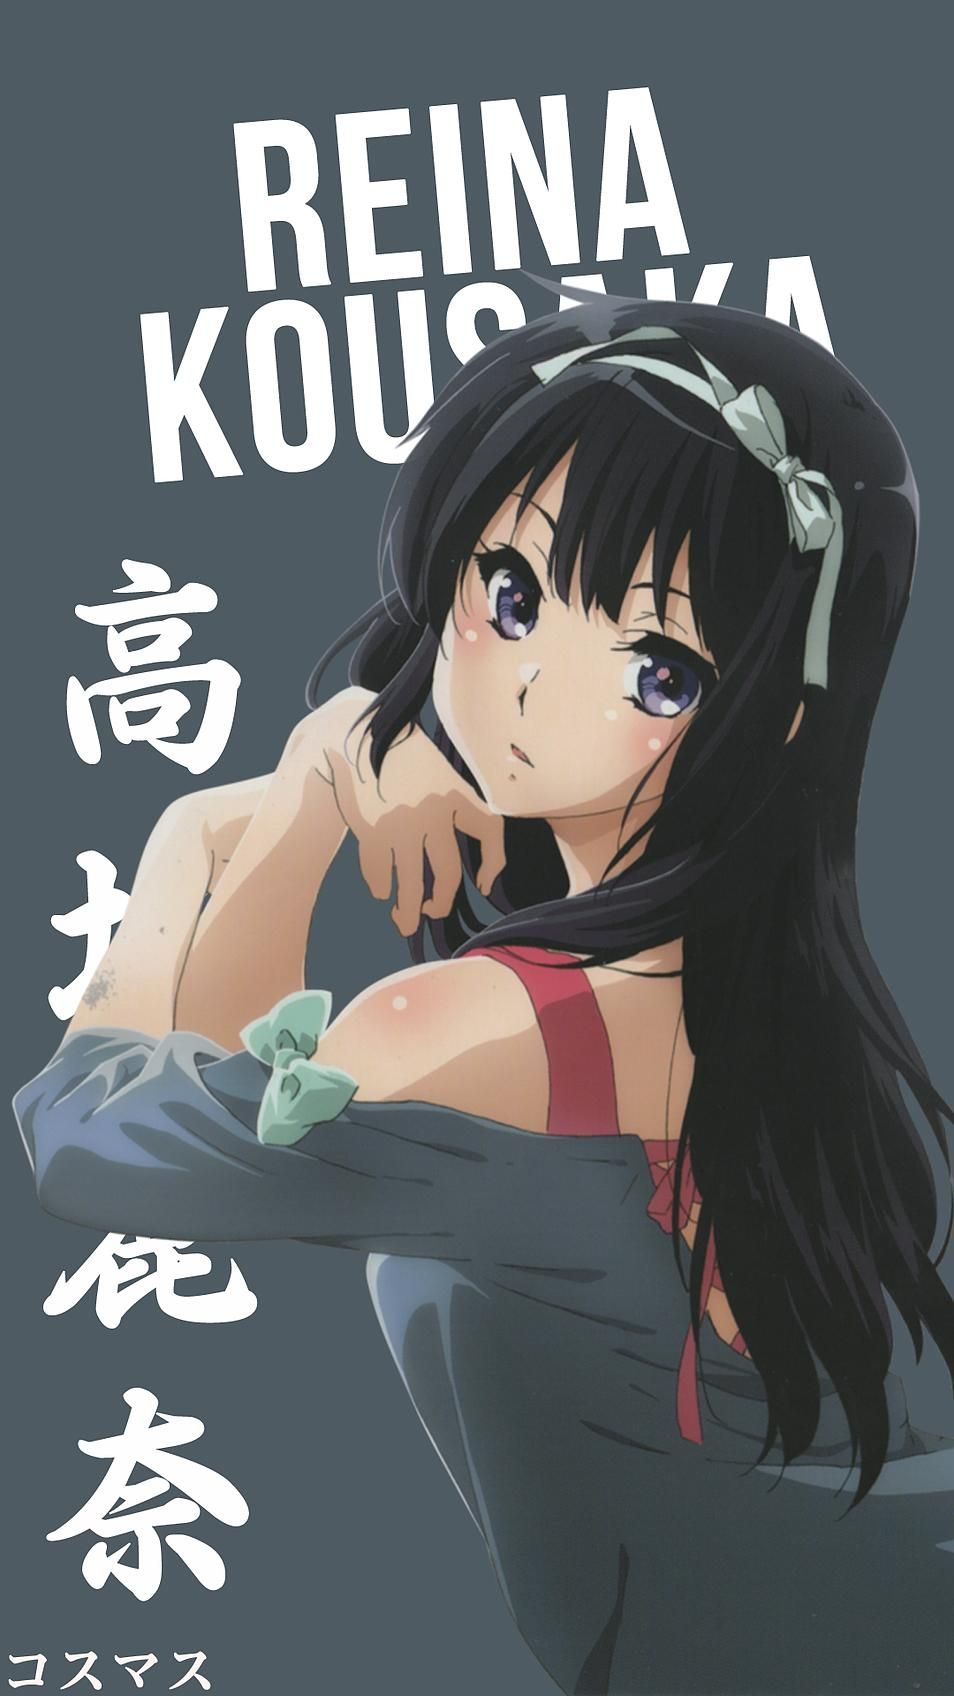 Reina Kousaka Korigengi. Wallpaper Anime. Anime, Anime wallpaper, Anime characters